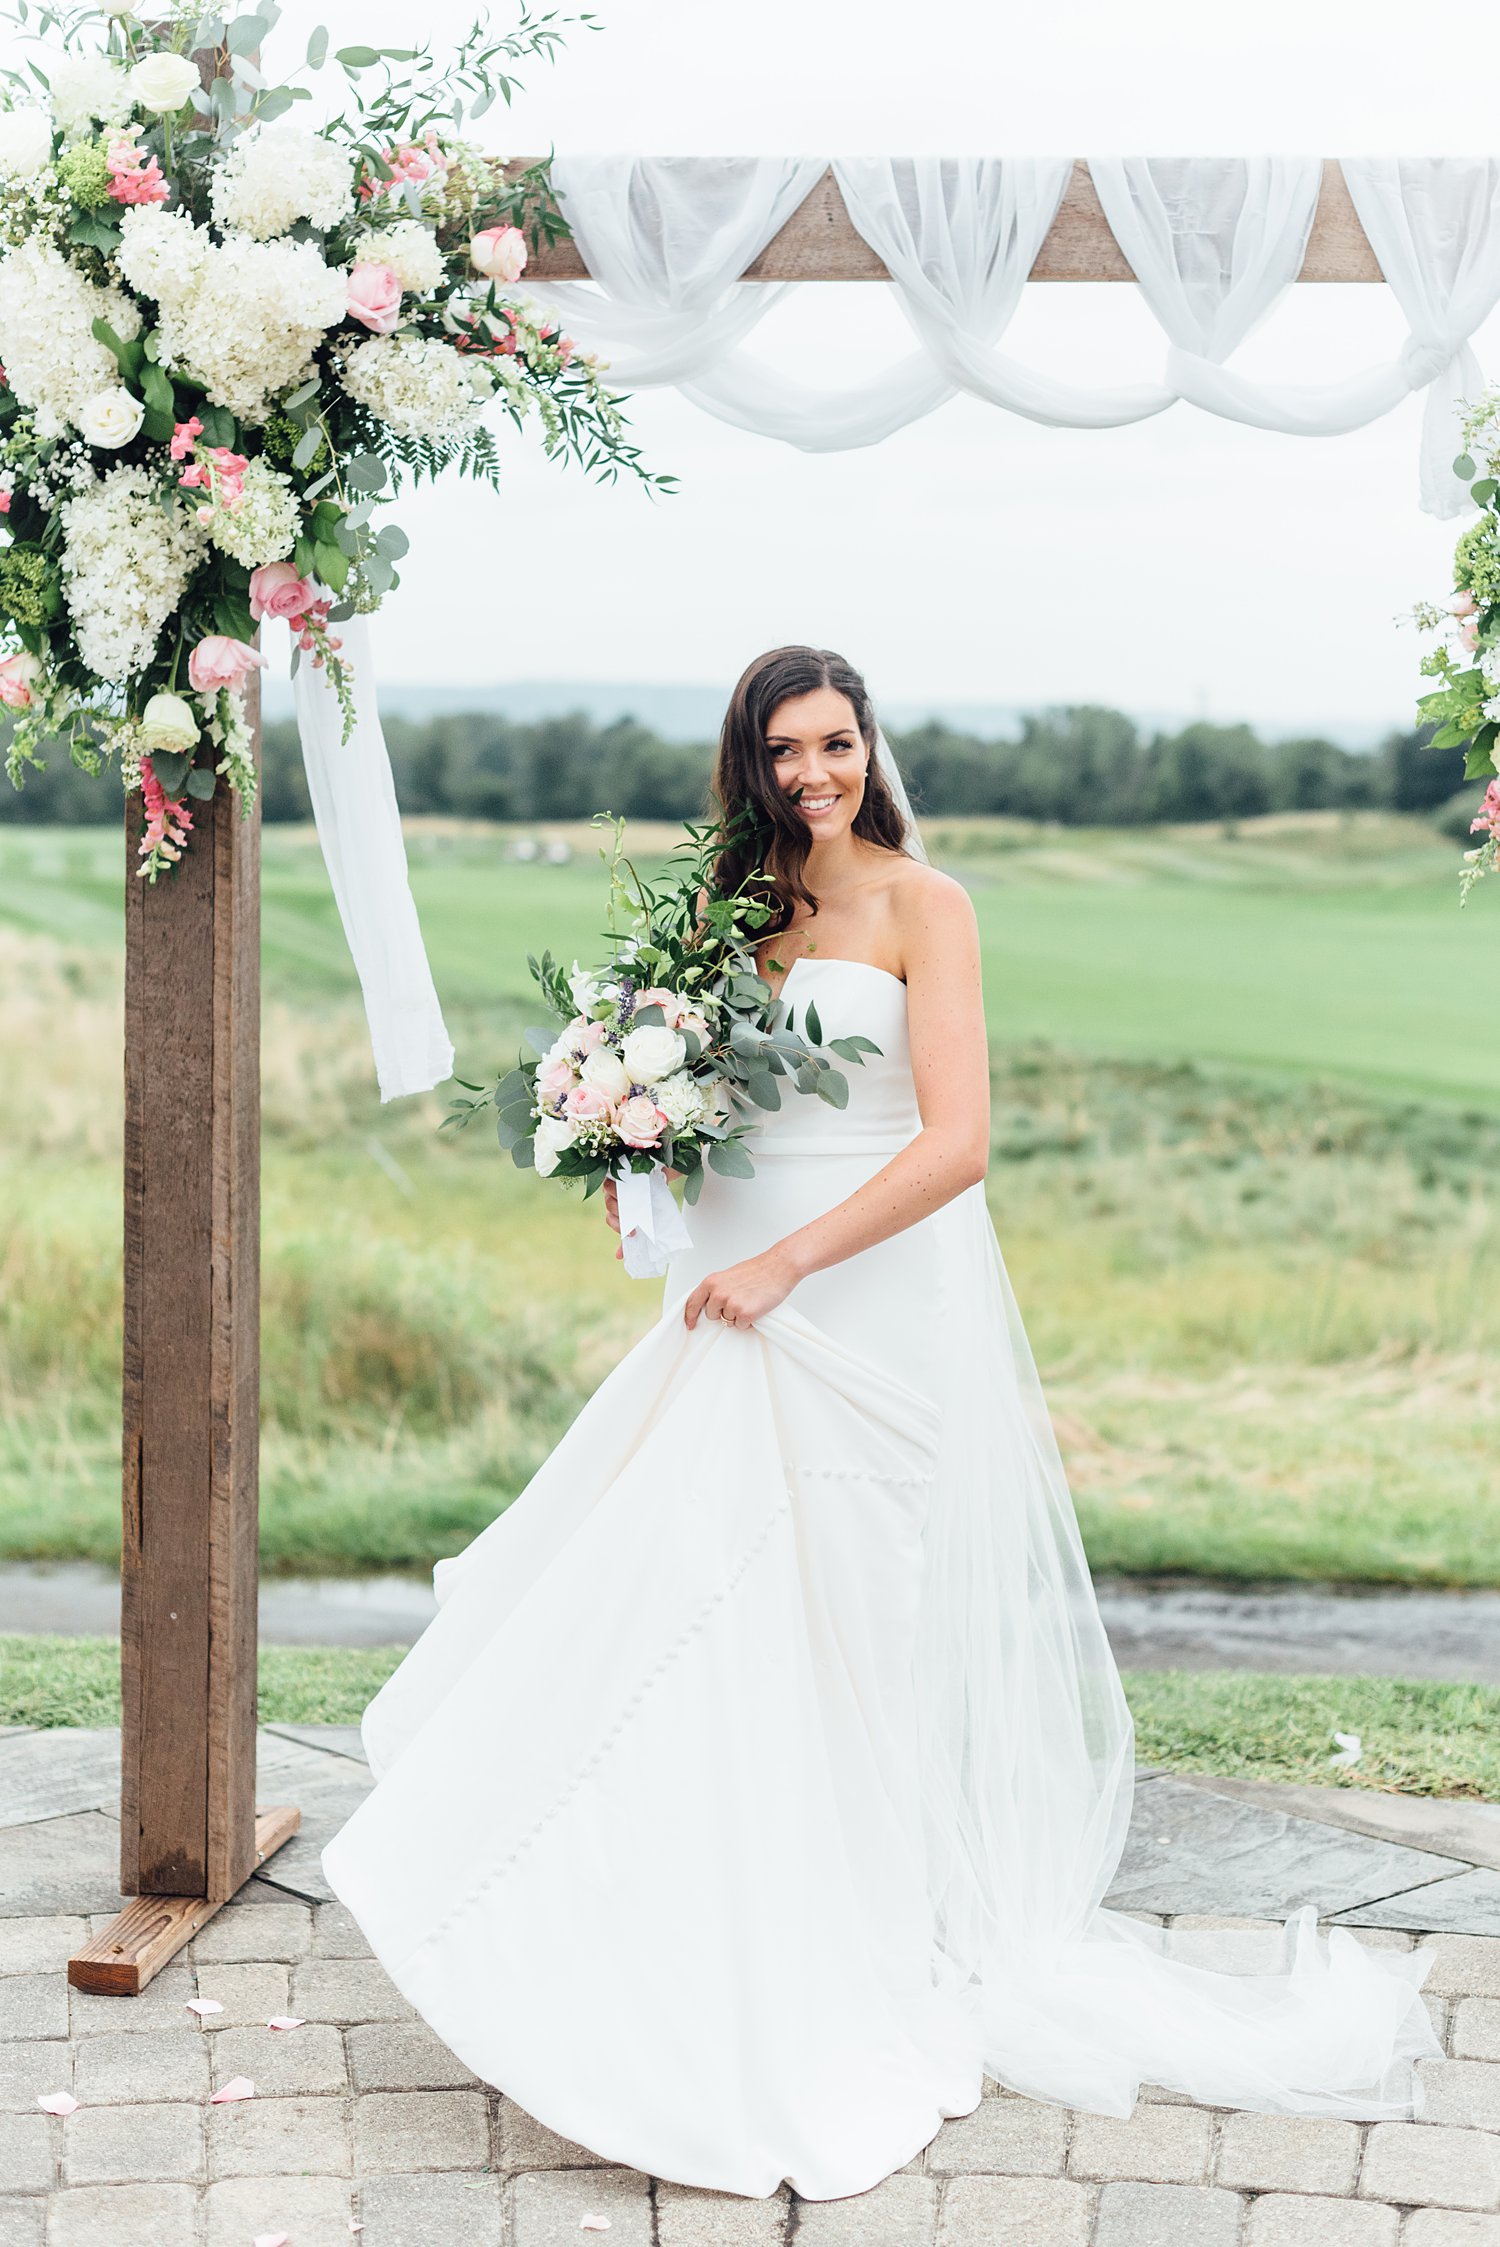 Tess + Devin - Architect's Golf Club wedding - Maryland wedding photographer - Alison Dunn Photography photo